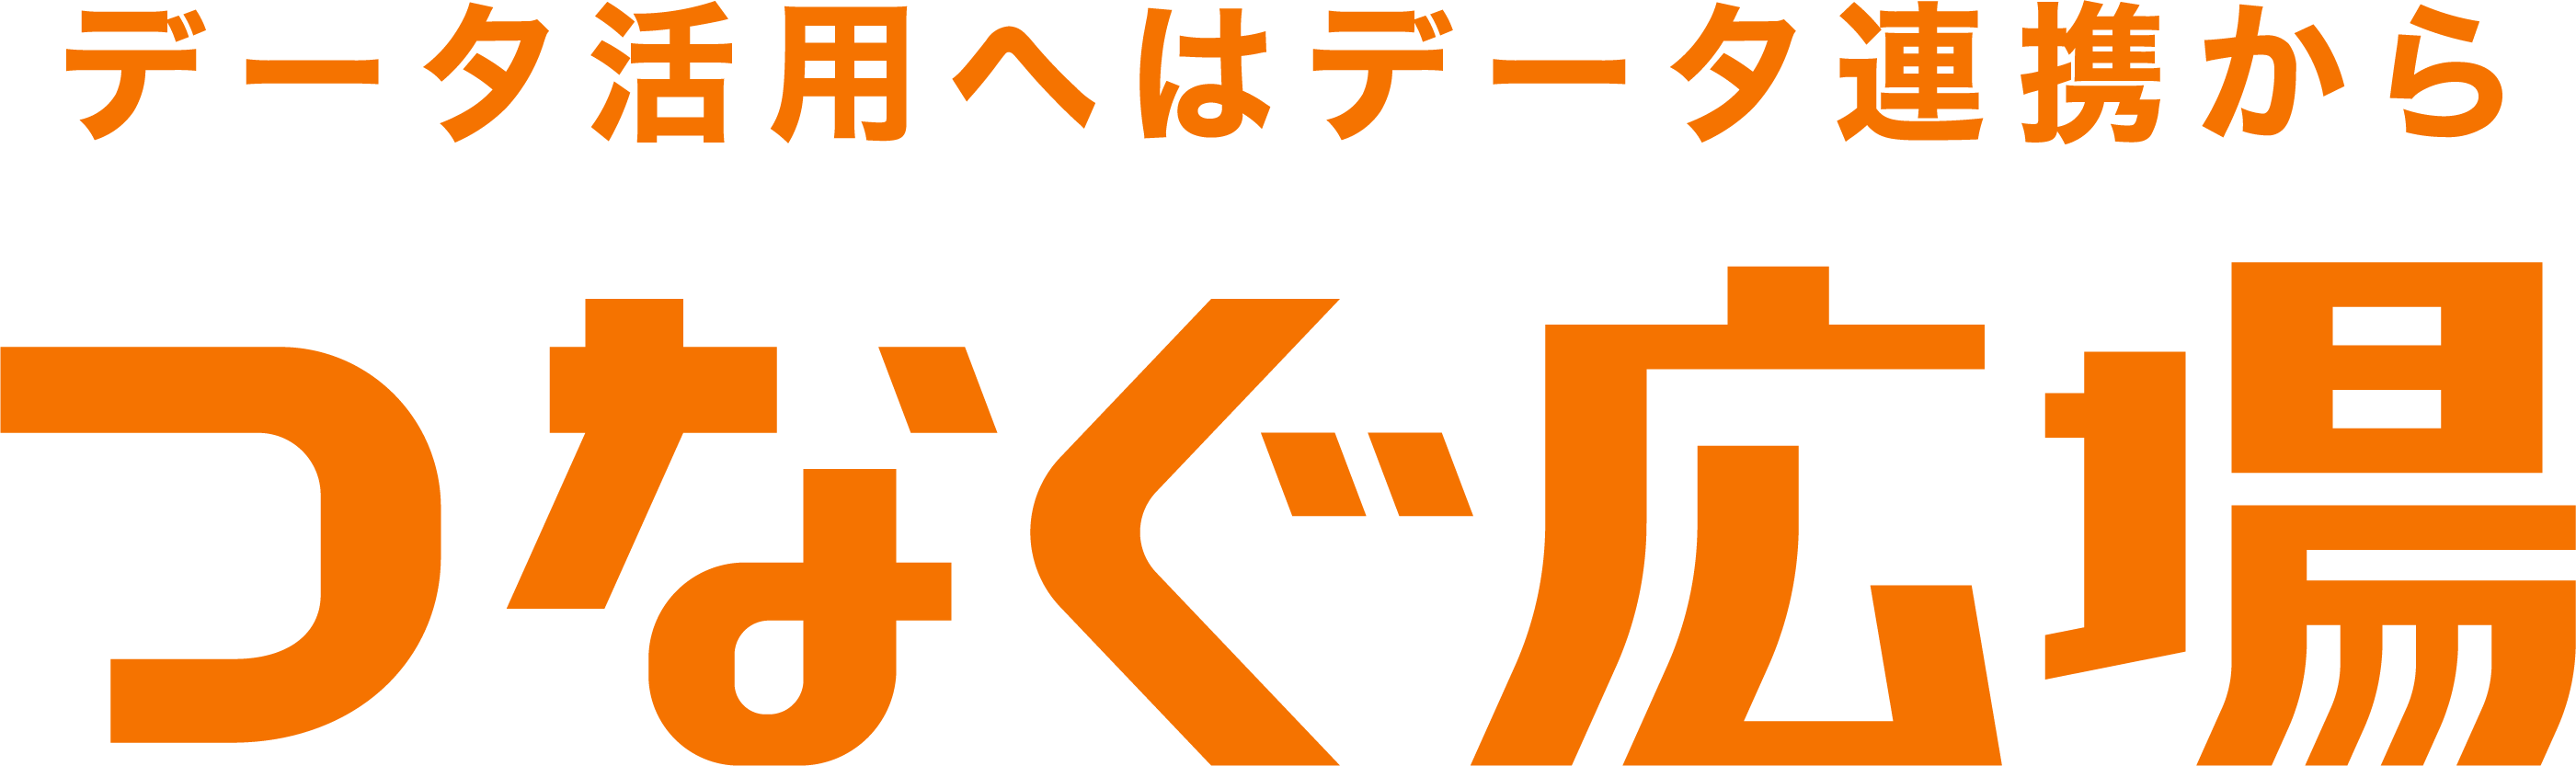 tsunagu_logo.png